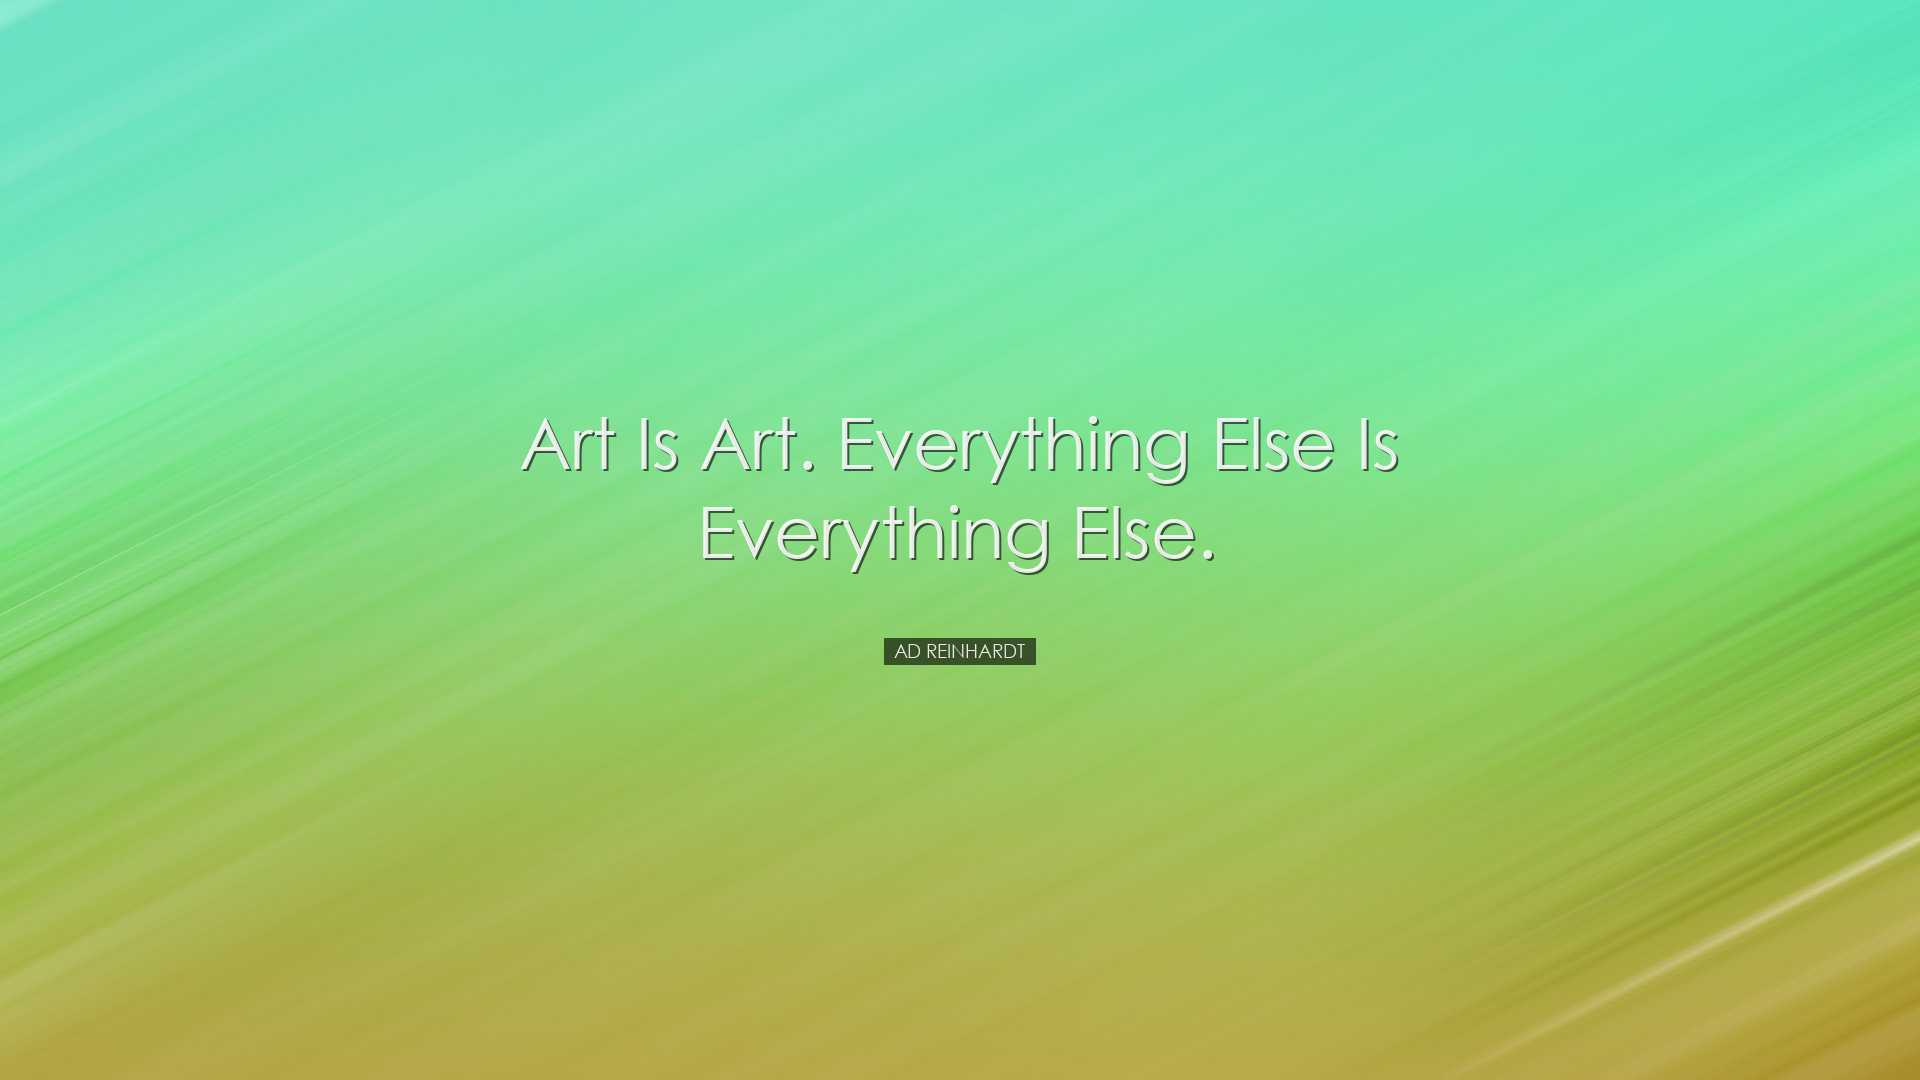 Art is Art. Everything else is everything else. - Ad Reinhardt